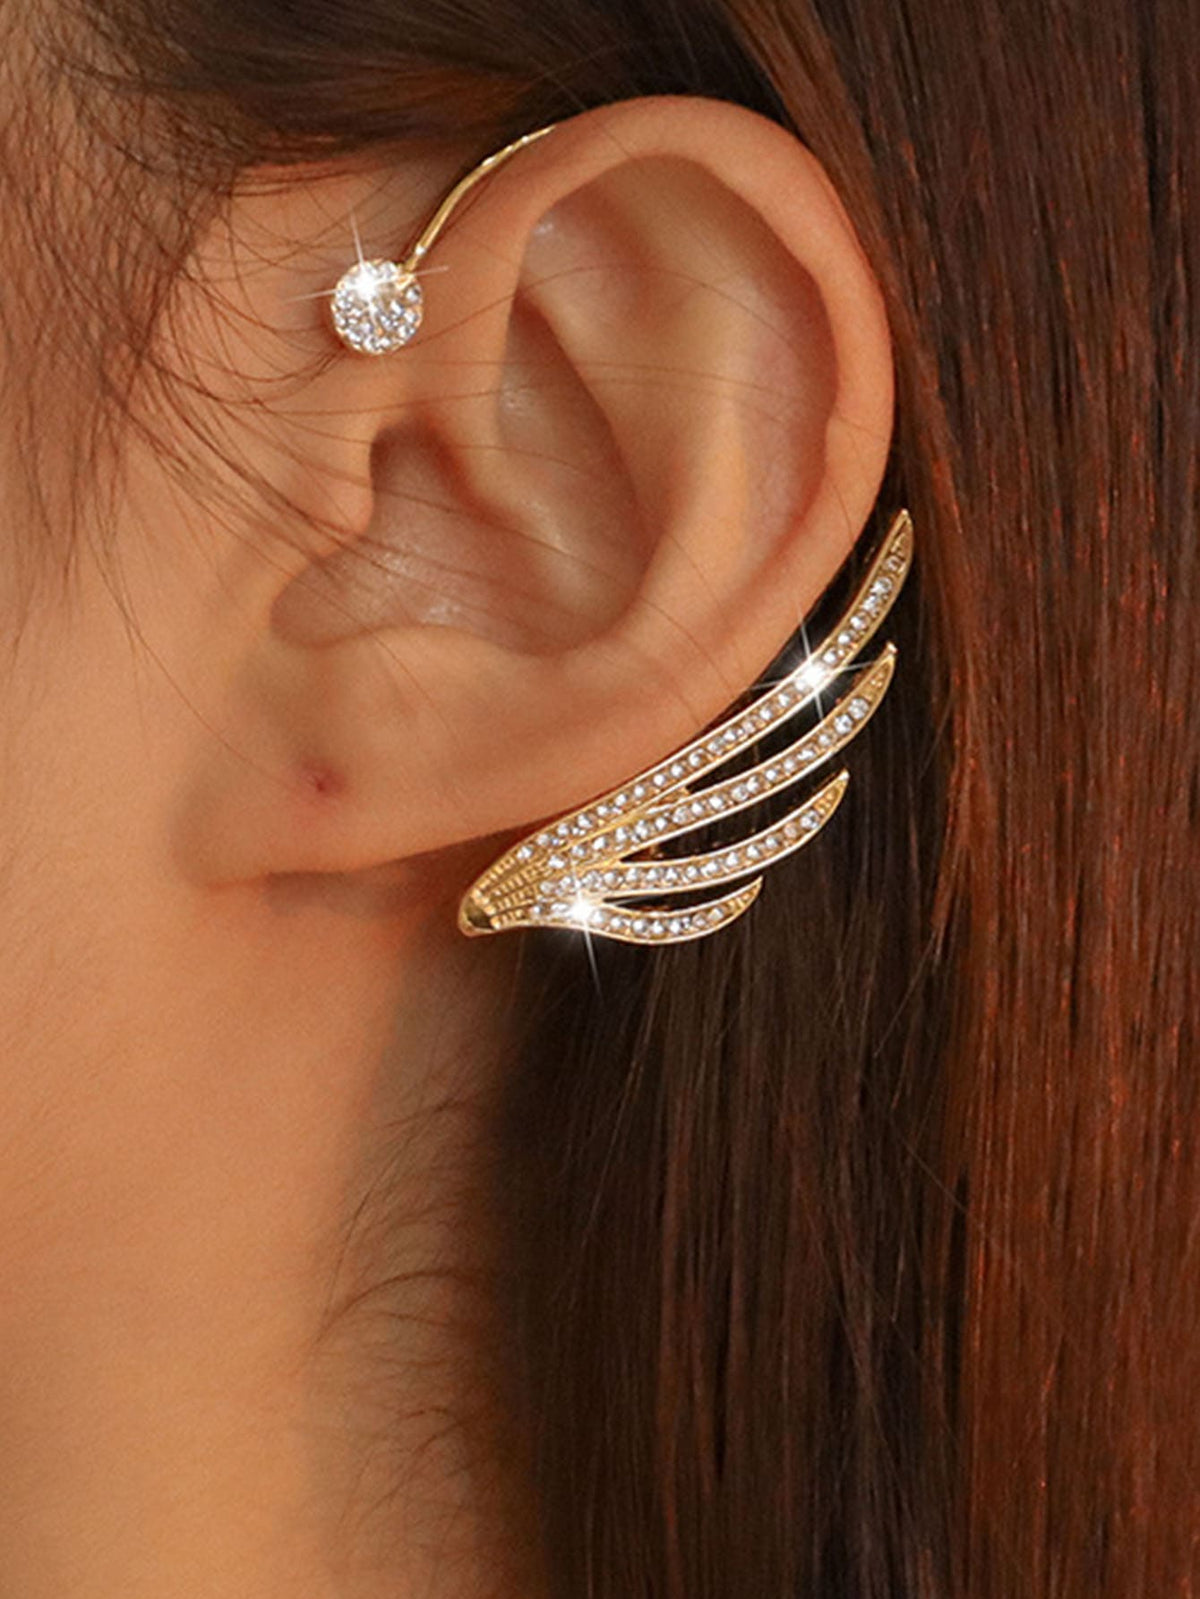 Arzonai 2 Pcs /1 Pair Rhinestone Decor Ear Cuff for Women and Girls